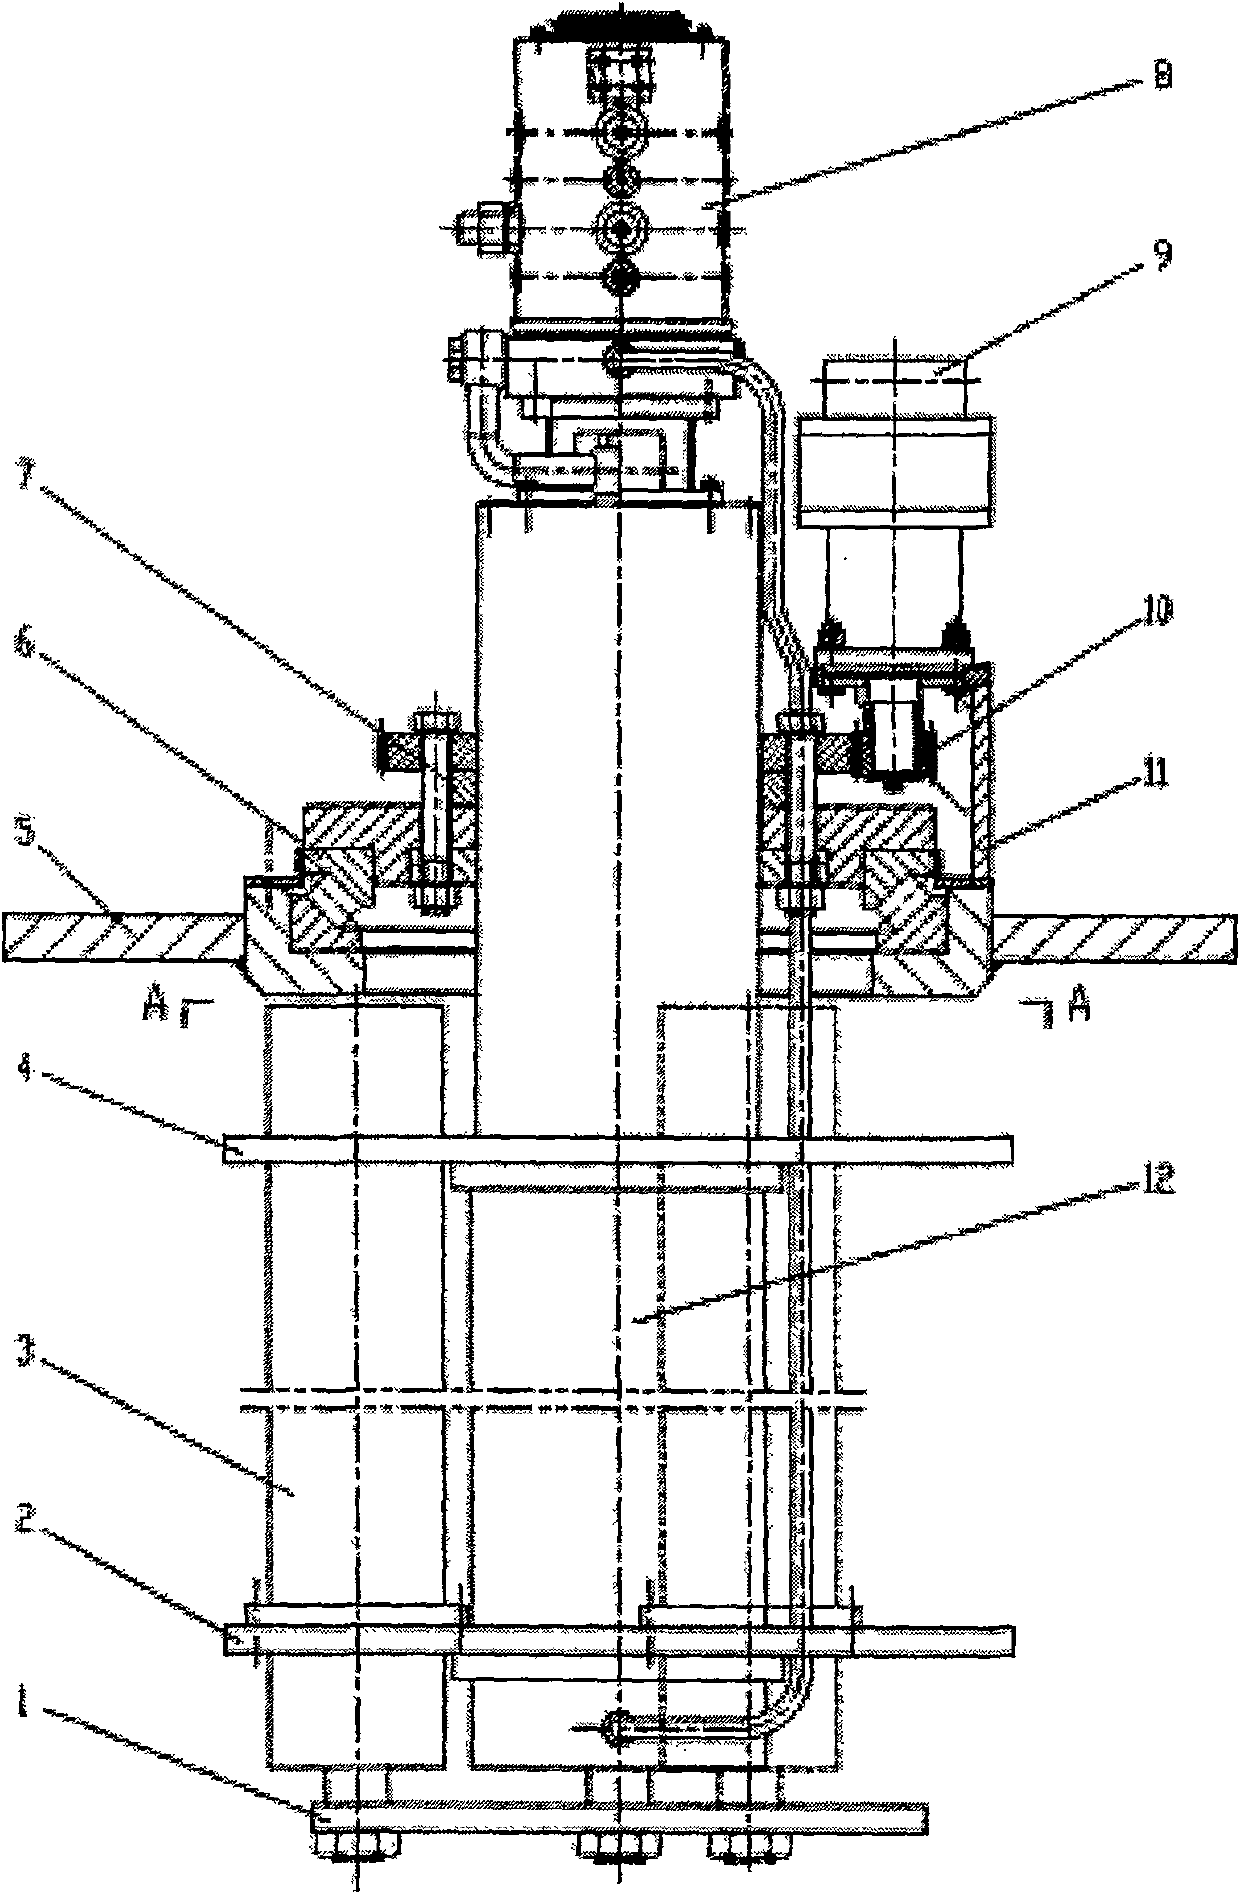 Hydraulic up-down swing mechanism